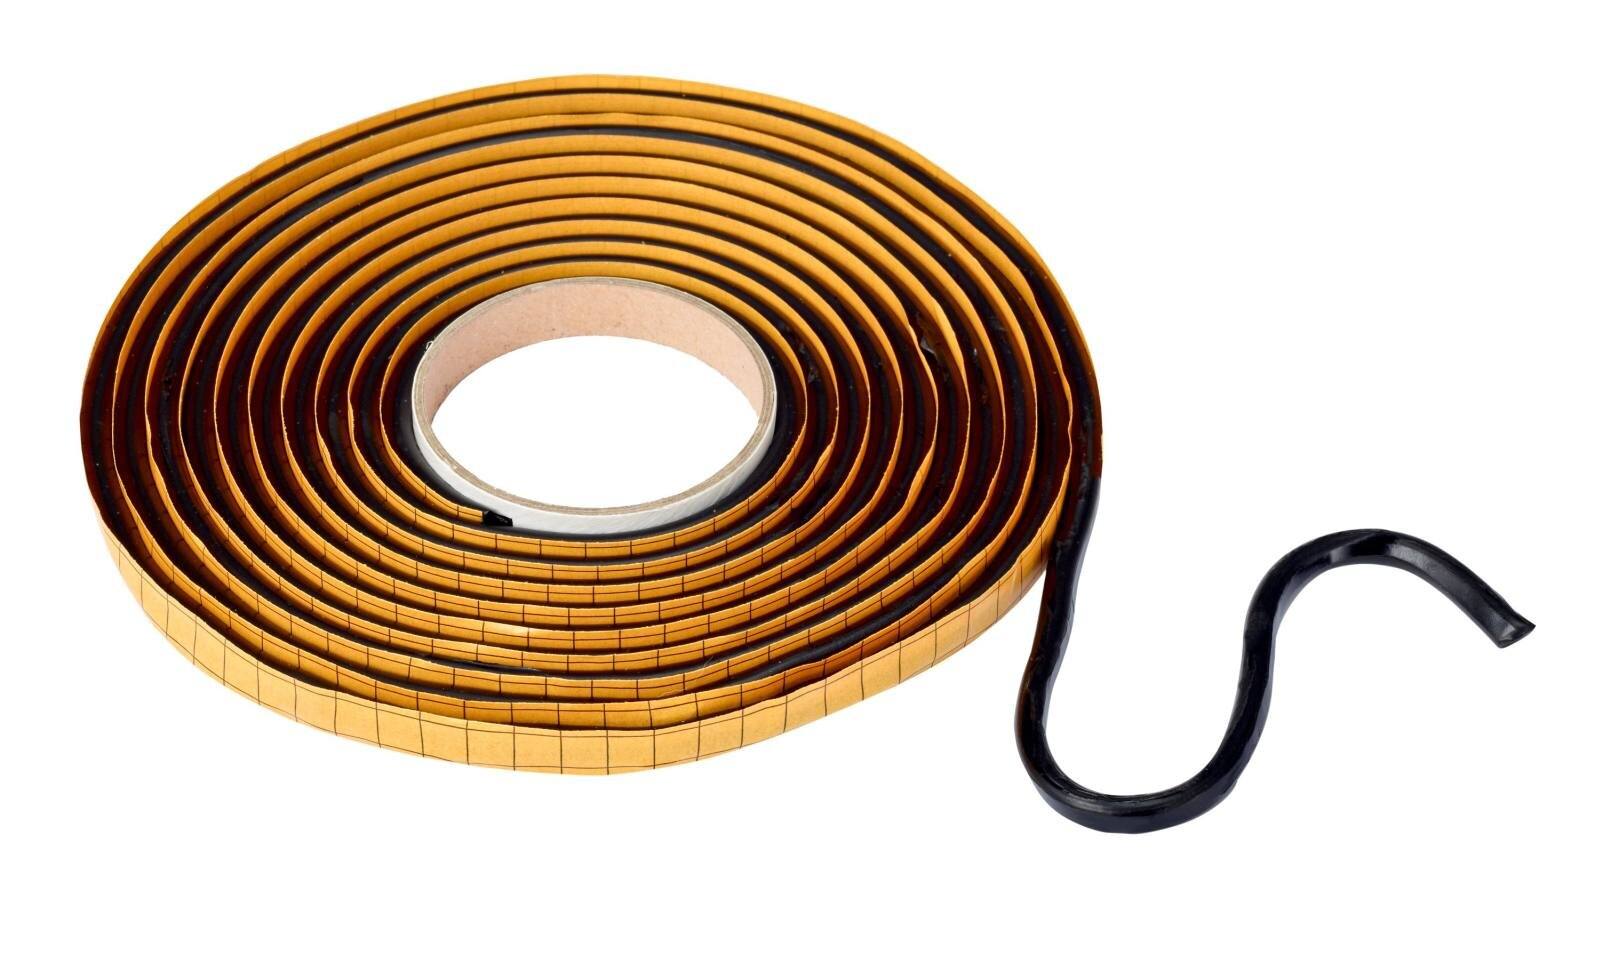 3M Scotch-Weld round cord based on butyl rubber 5313, black, diameter 8 mm x 6 m